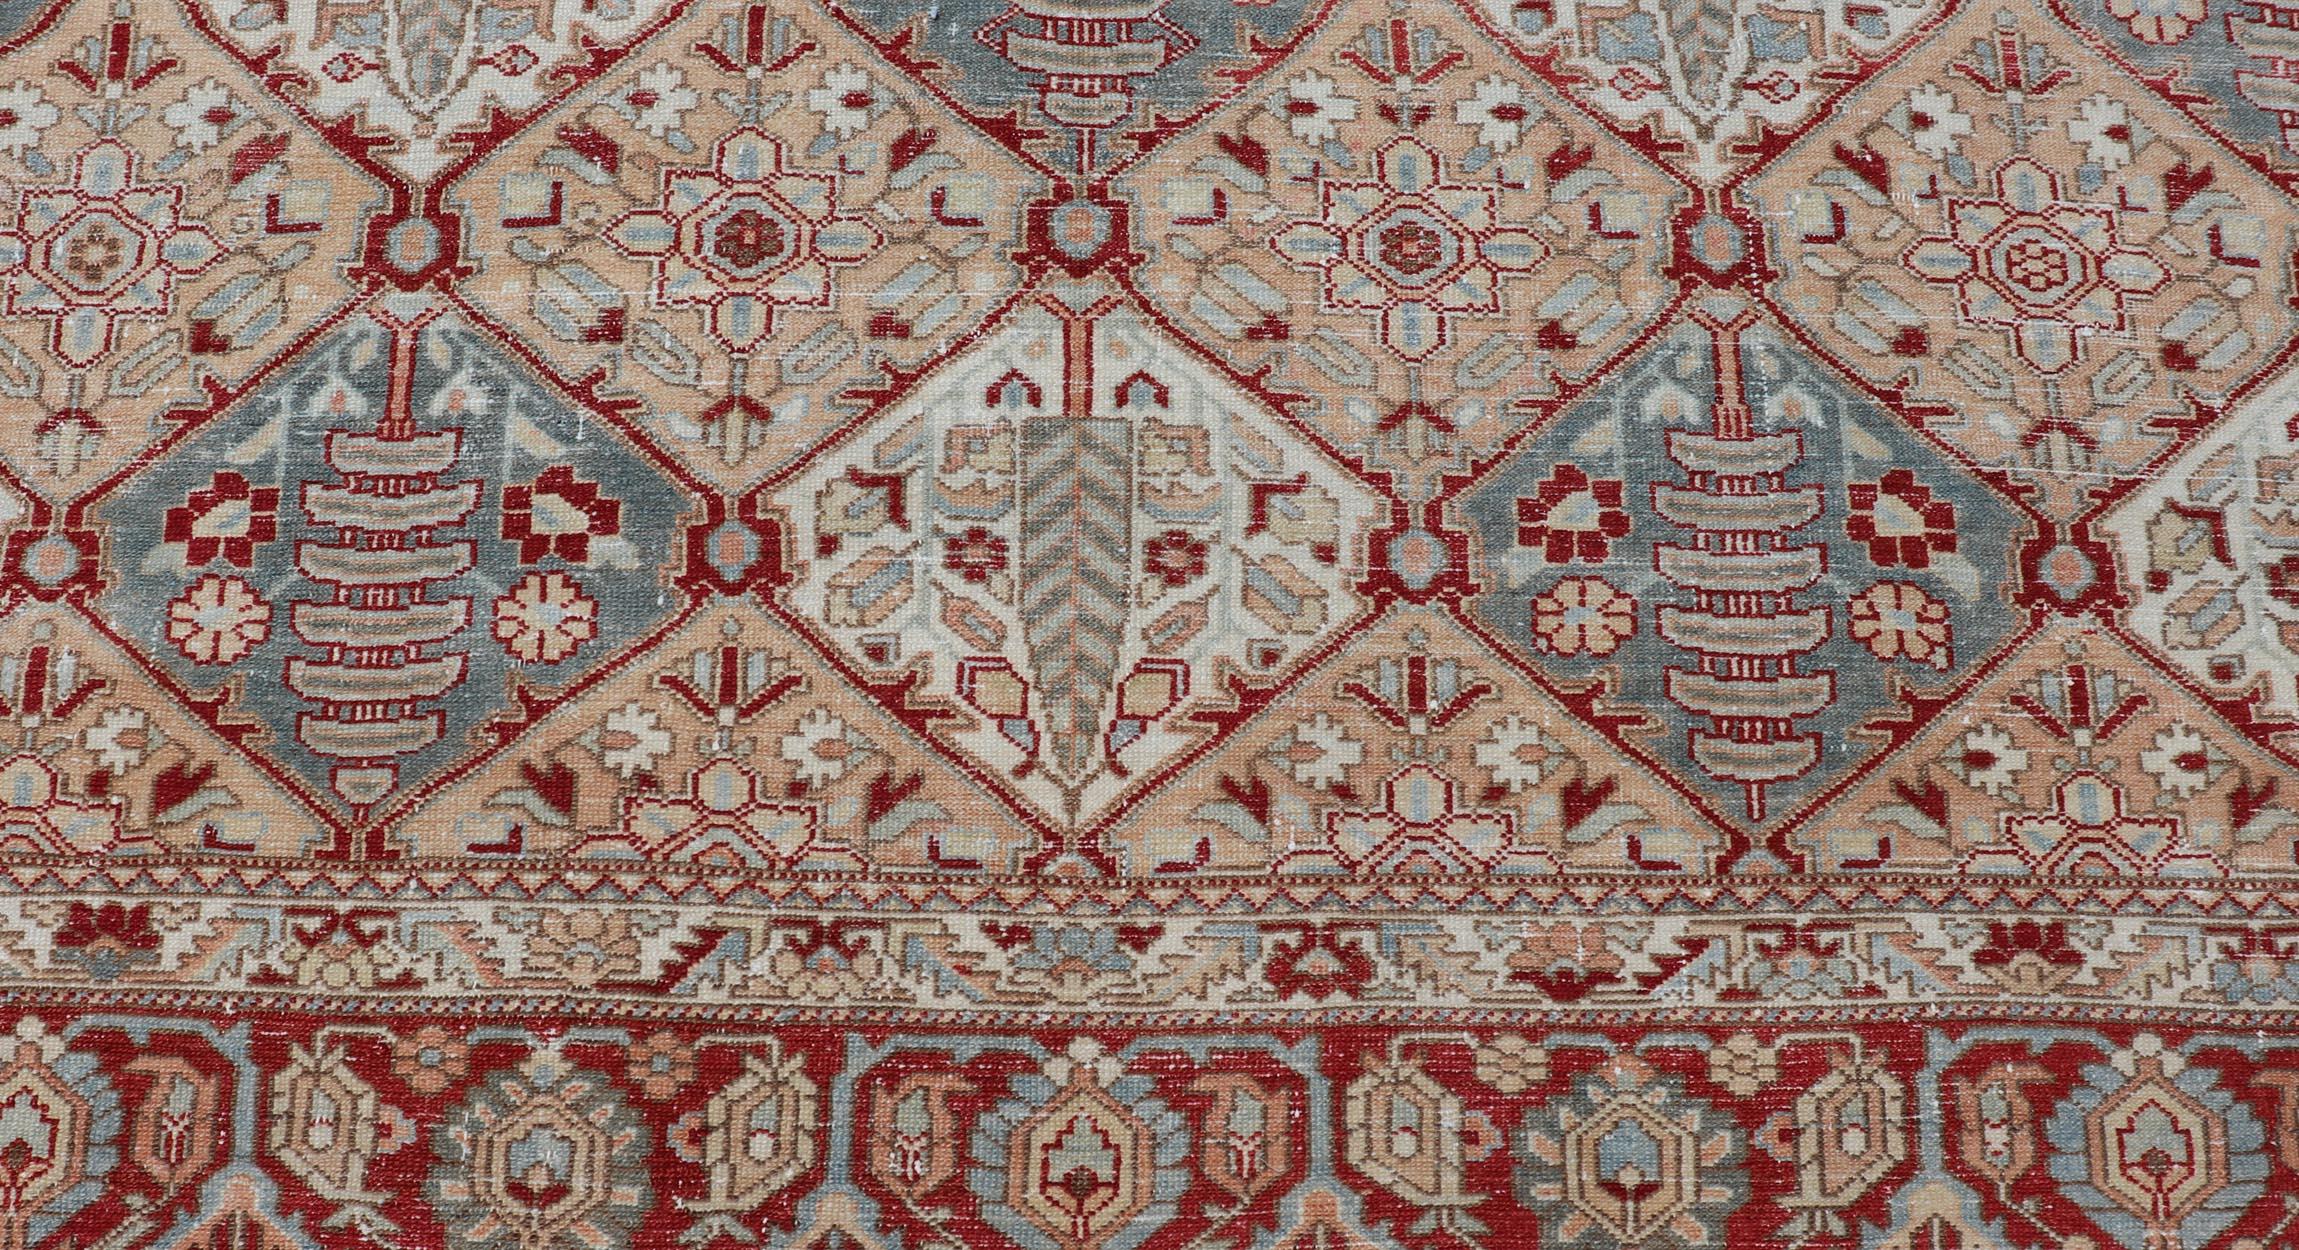 Antique Persian All-Over Diamond Design Bakhtiari rug in Multi Colors With Red. Keivan Woven Arts / rug R20-0836, country of origin / type: Iran / Bakhtiari, circa 1920
Measures: 12'11 x 15'6 
Persian Bakhtiari rugs are in fact tribal pieces that